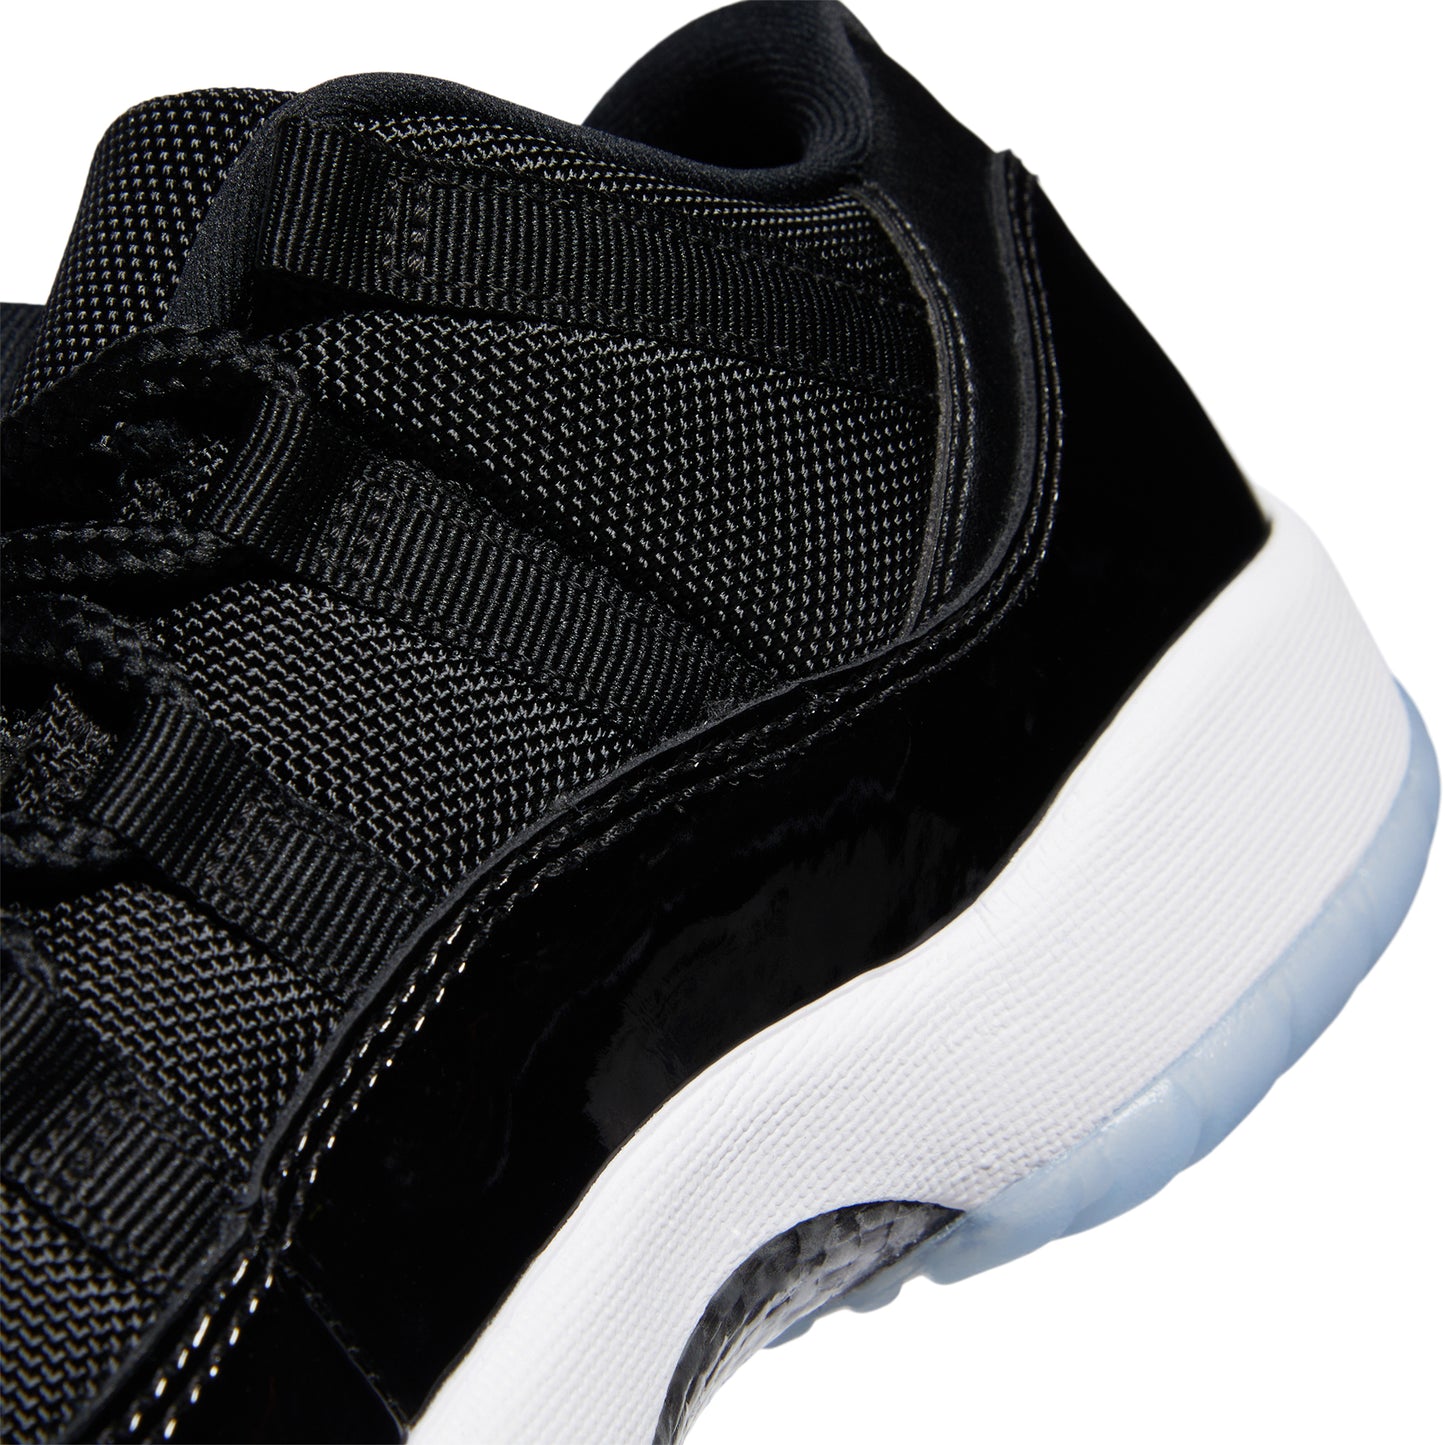 Nike Kids Air Jordan 11 Low (Black/Varsity Royal/White)